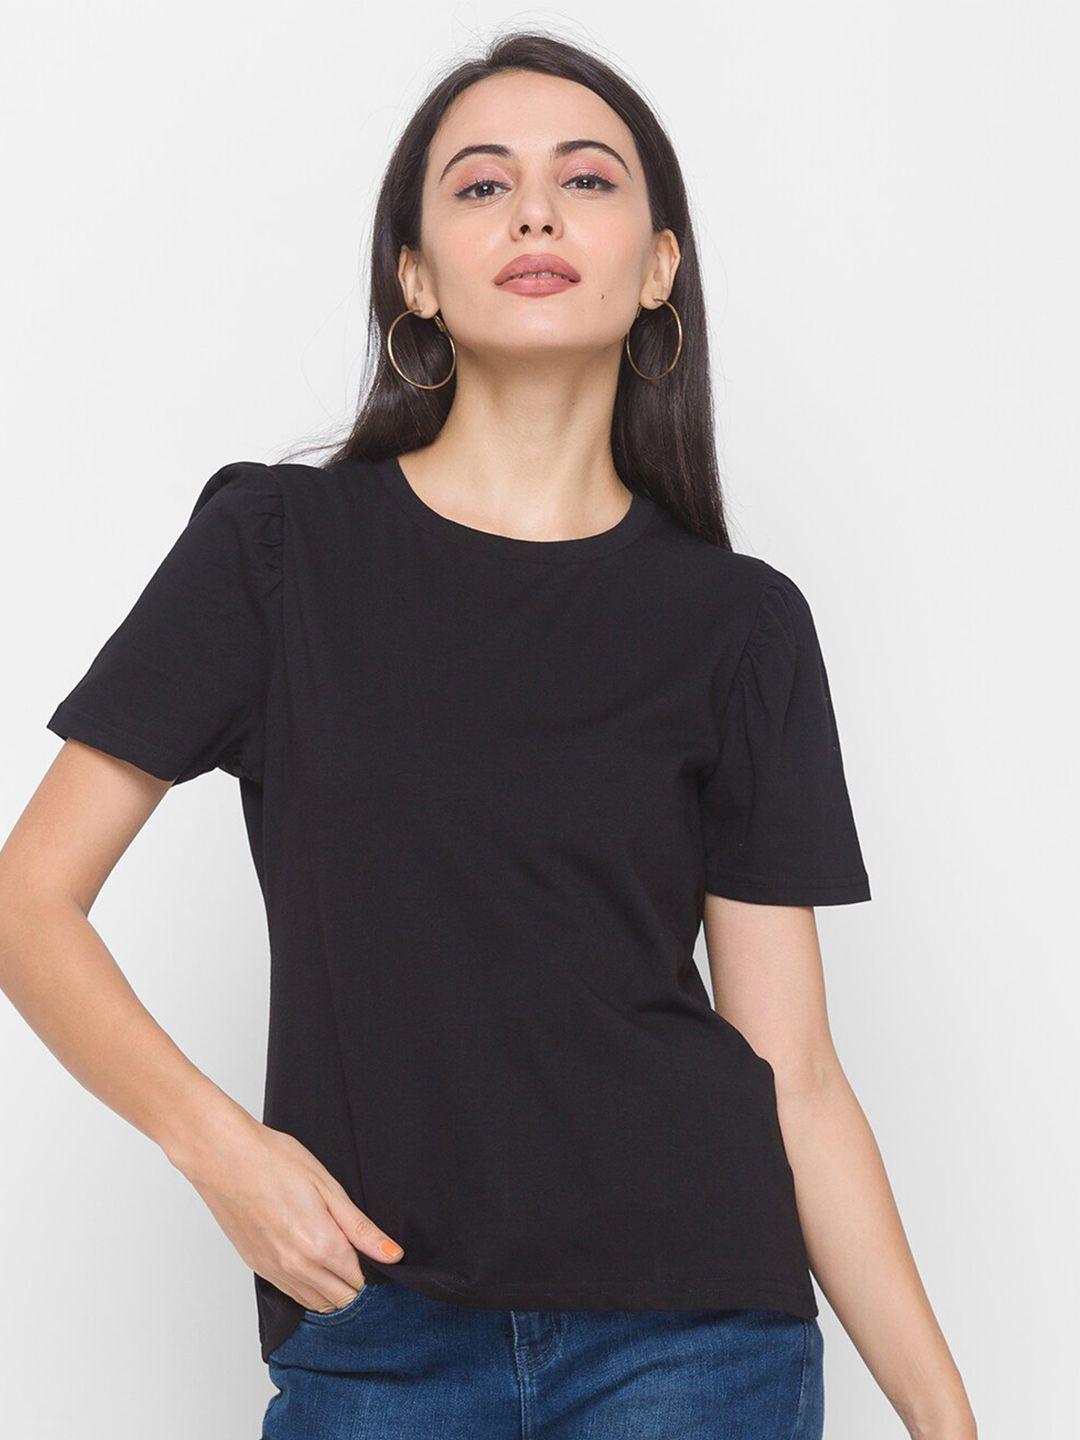 globus-women-black-t-shirt